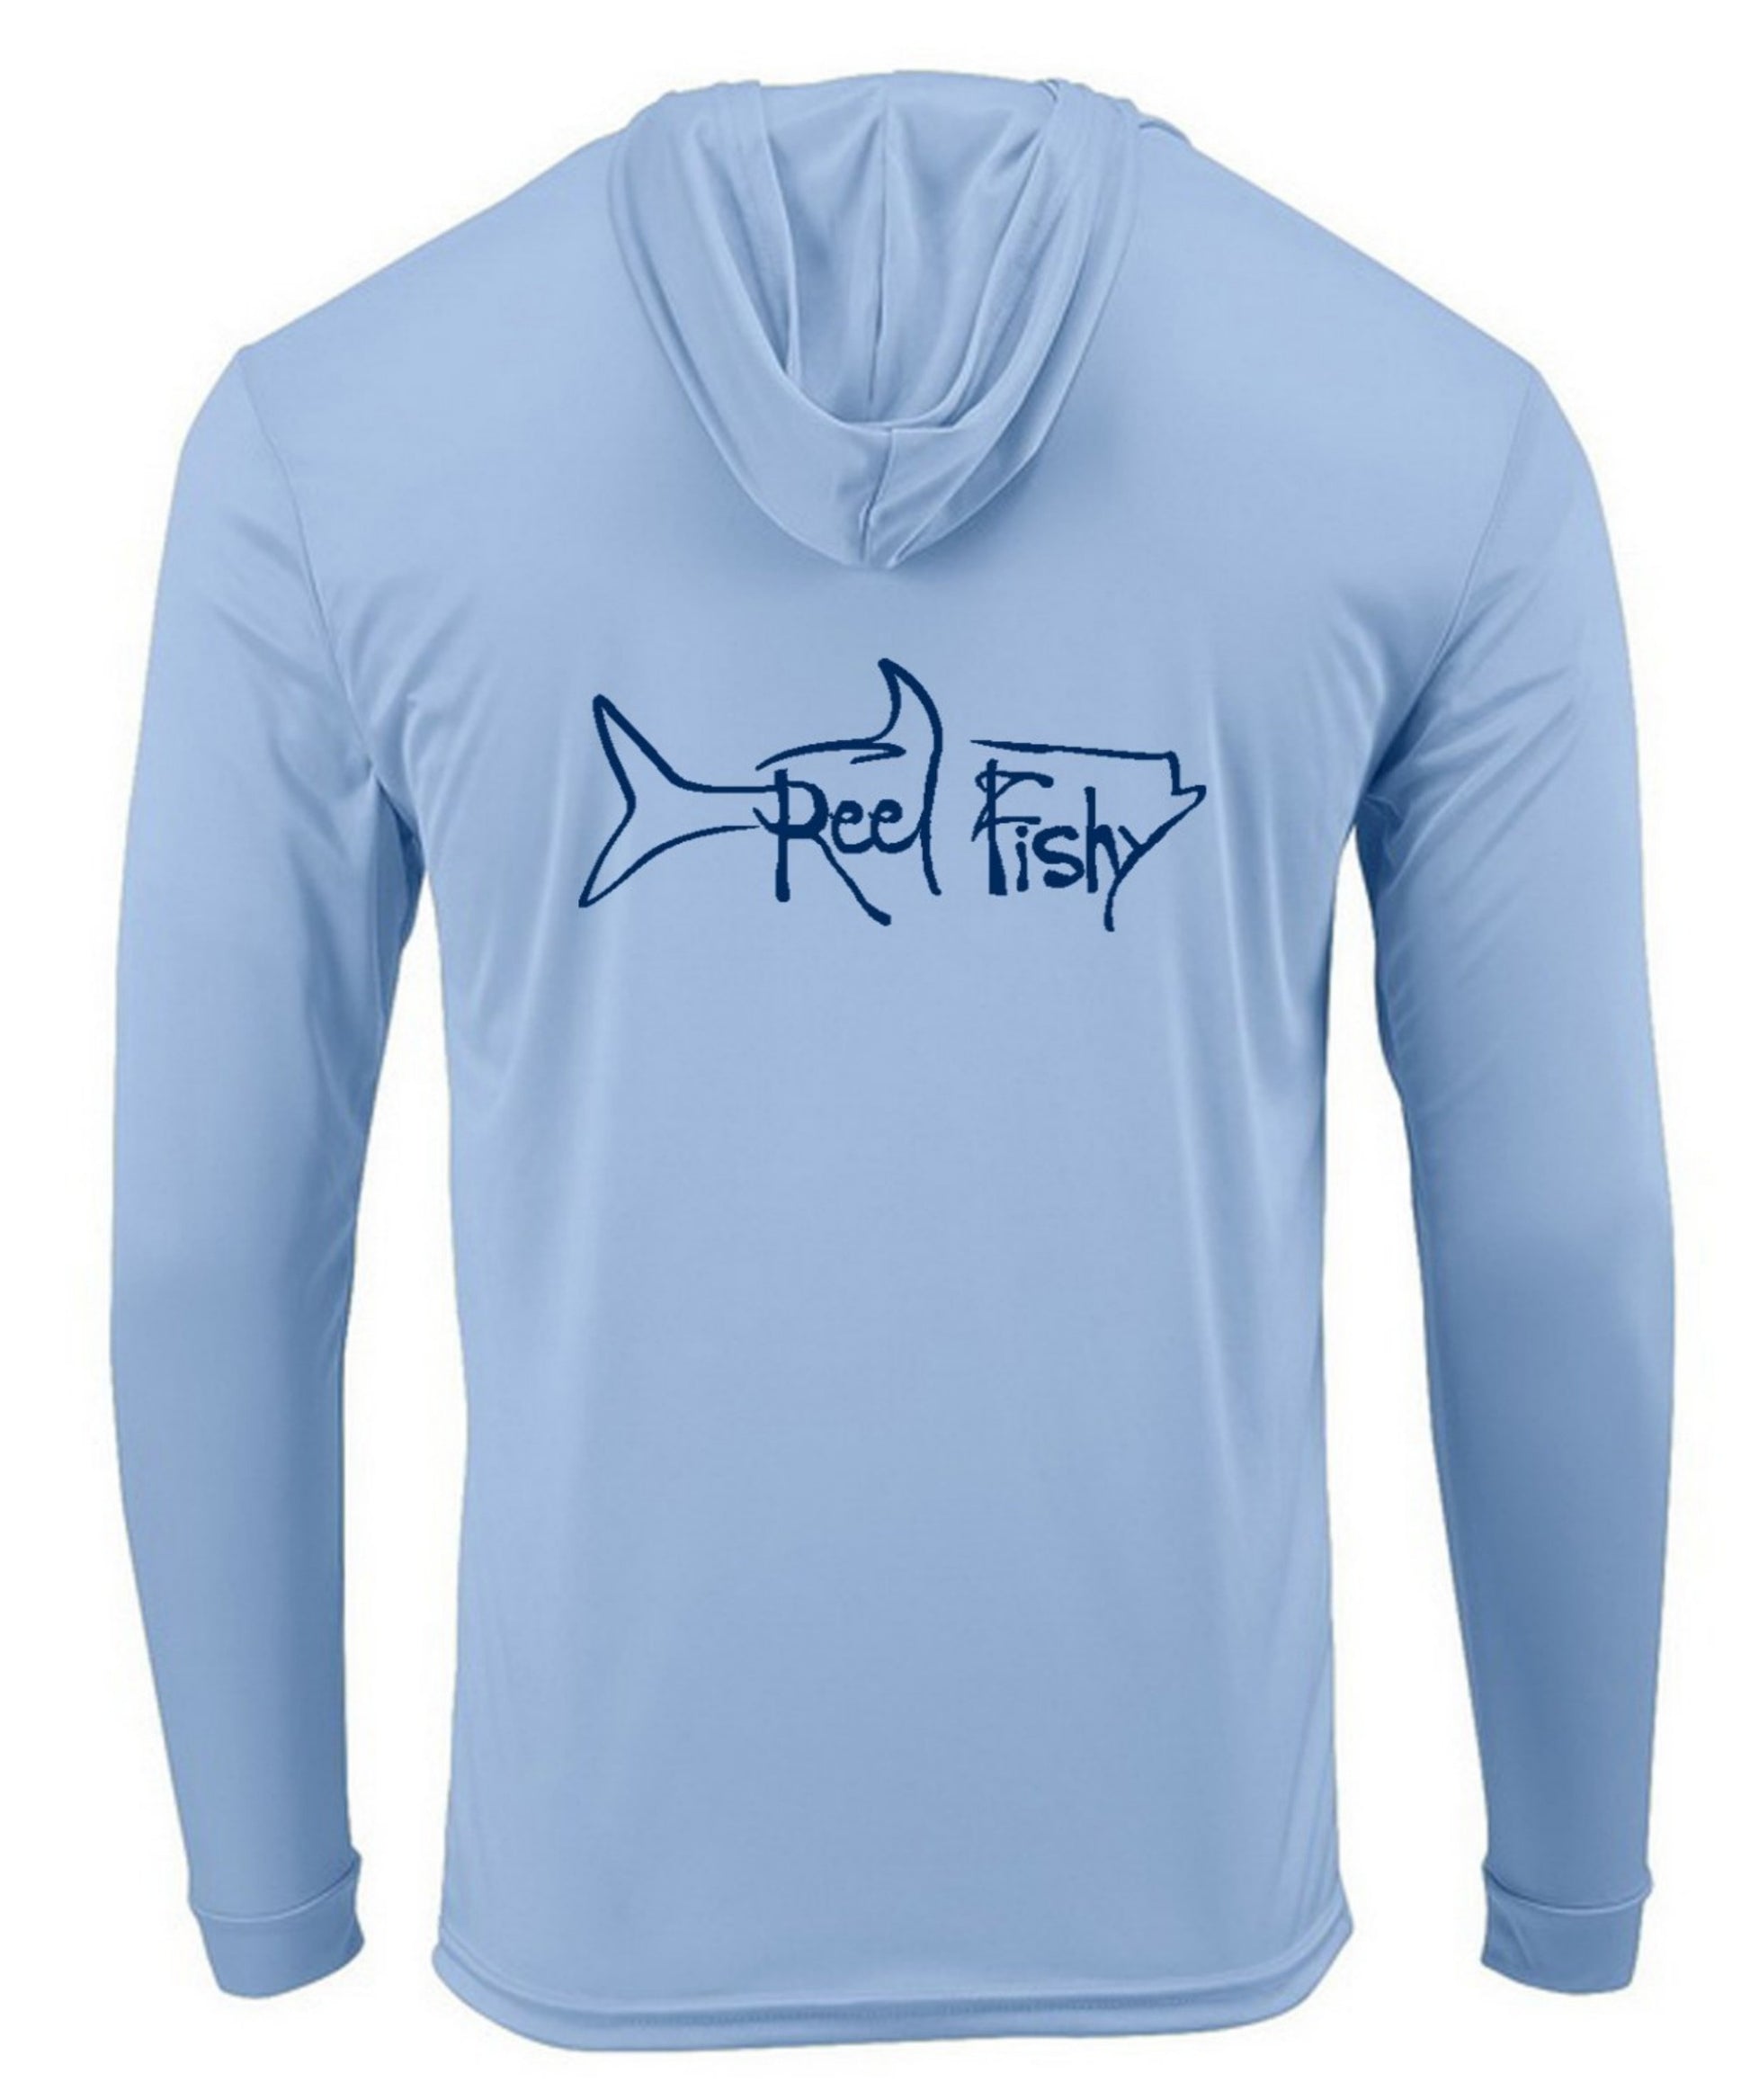 Blue Mist Tarpon Hoodie Performance Dry-Fit Fishing Long Sleeve Shirts, 50+ UPF Sun Protection  - Reel Fishy Apparel